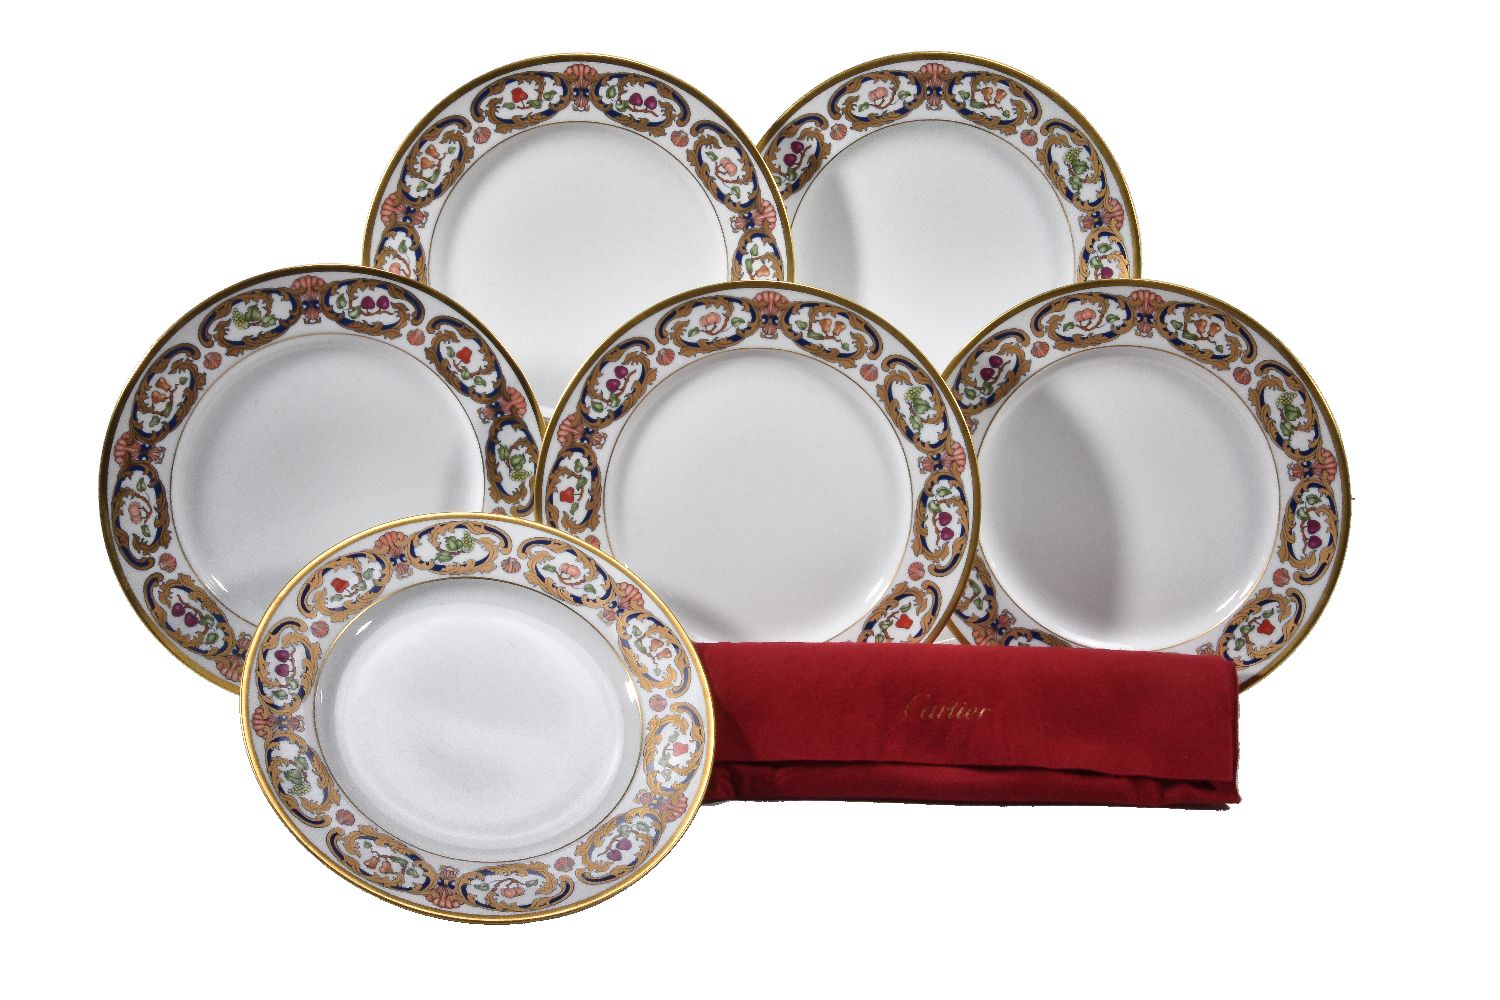 Cartier by Limoges, La Maison Du Prince, a set of six dinner plates - Image 2 of 3